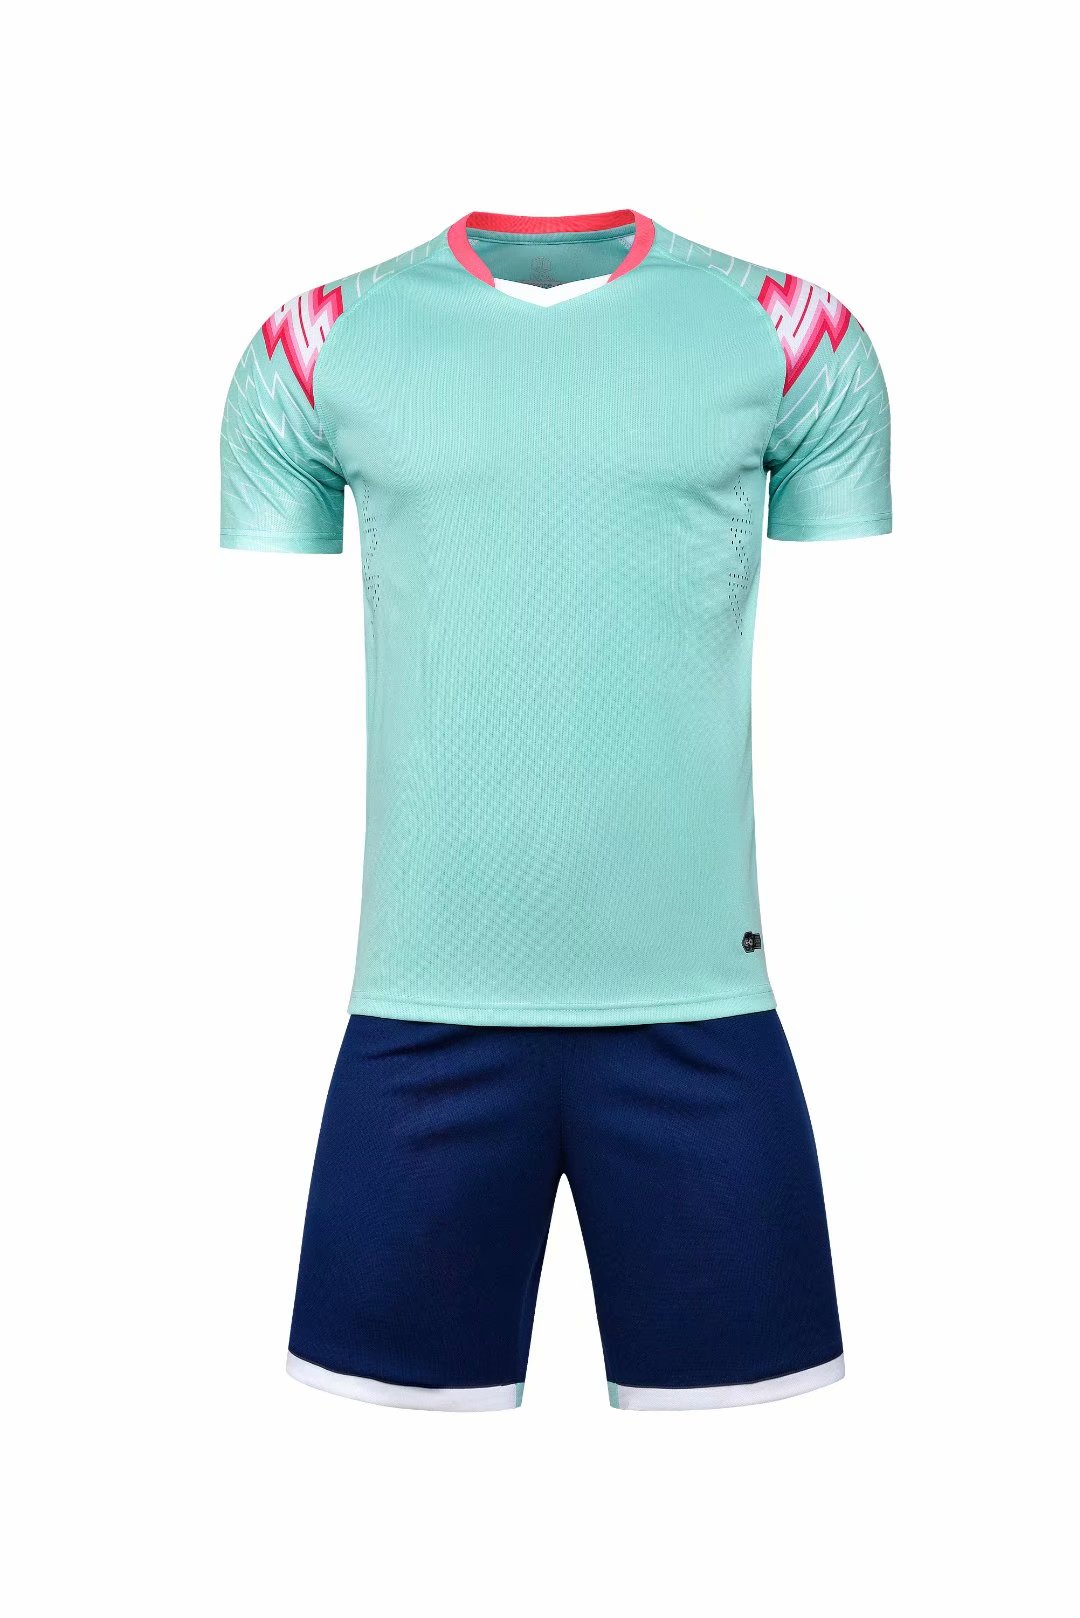 TA Bolt Football Shirt - TeamApparel™